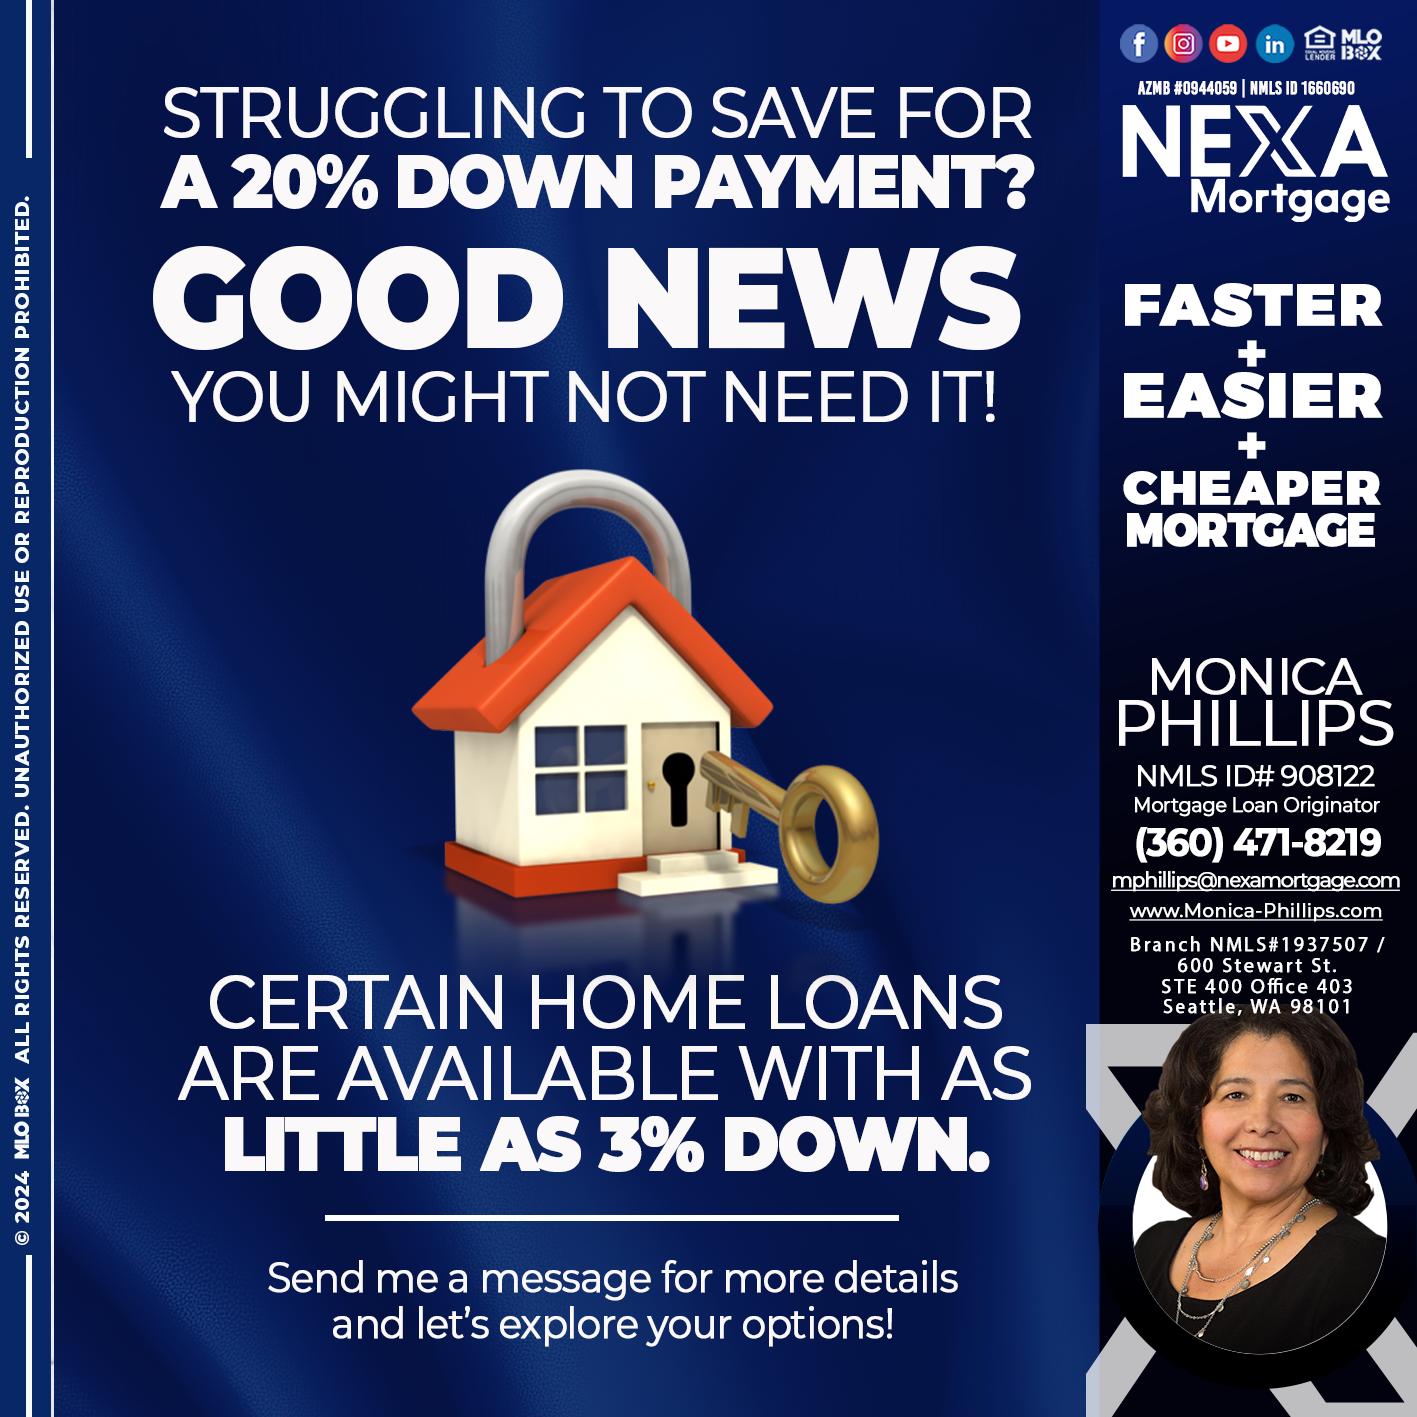 good news - Monica Phillips -Loan Officer